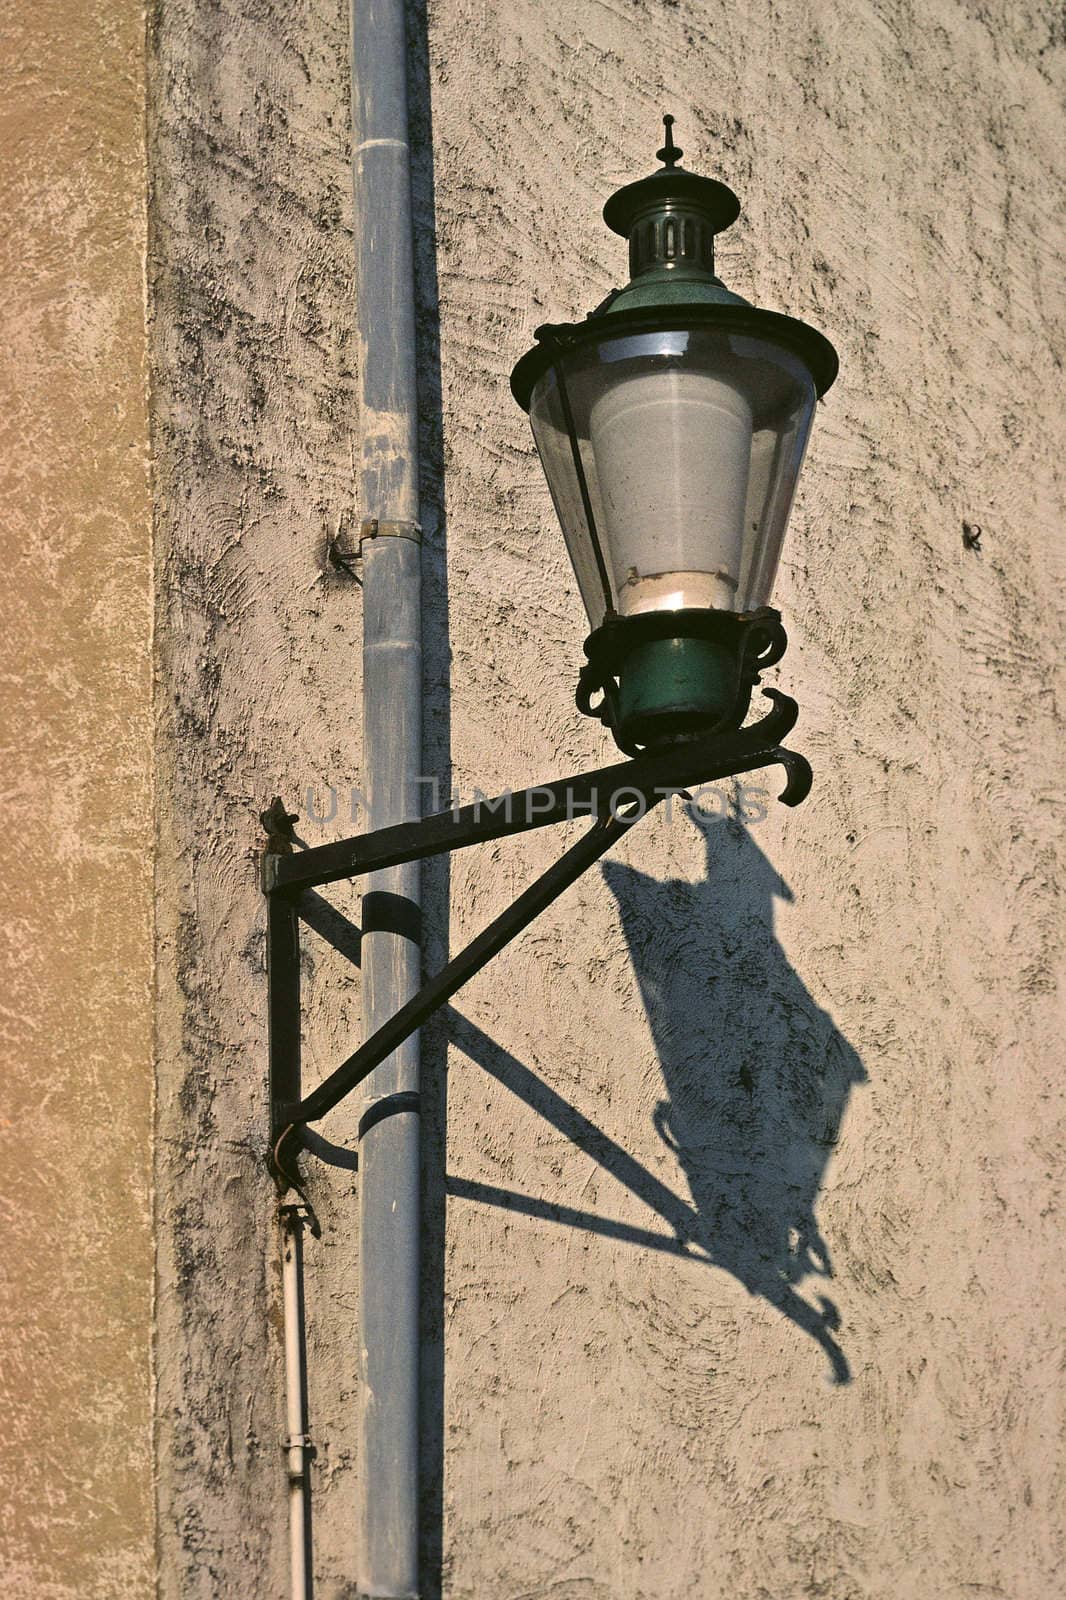 Old lantern in Osnabrück, Germany by Natureandmore